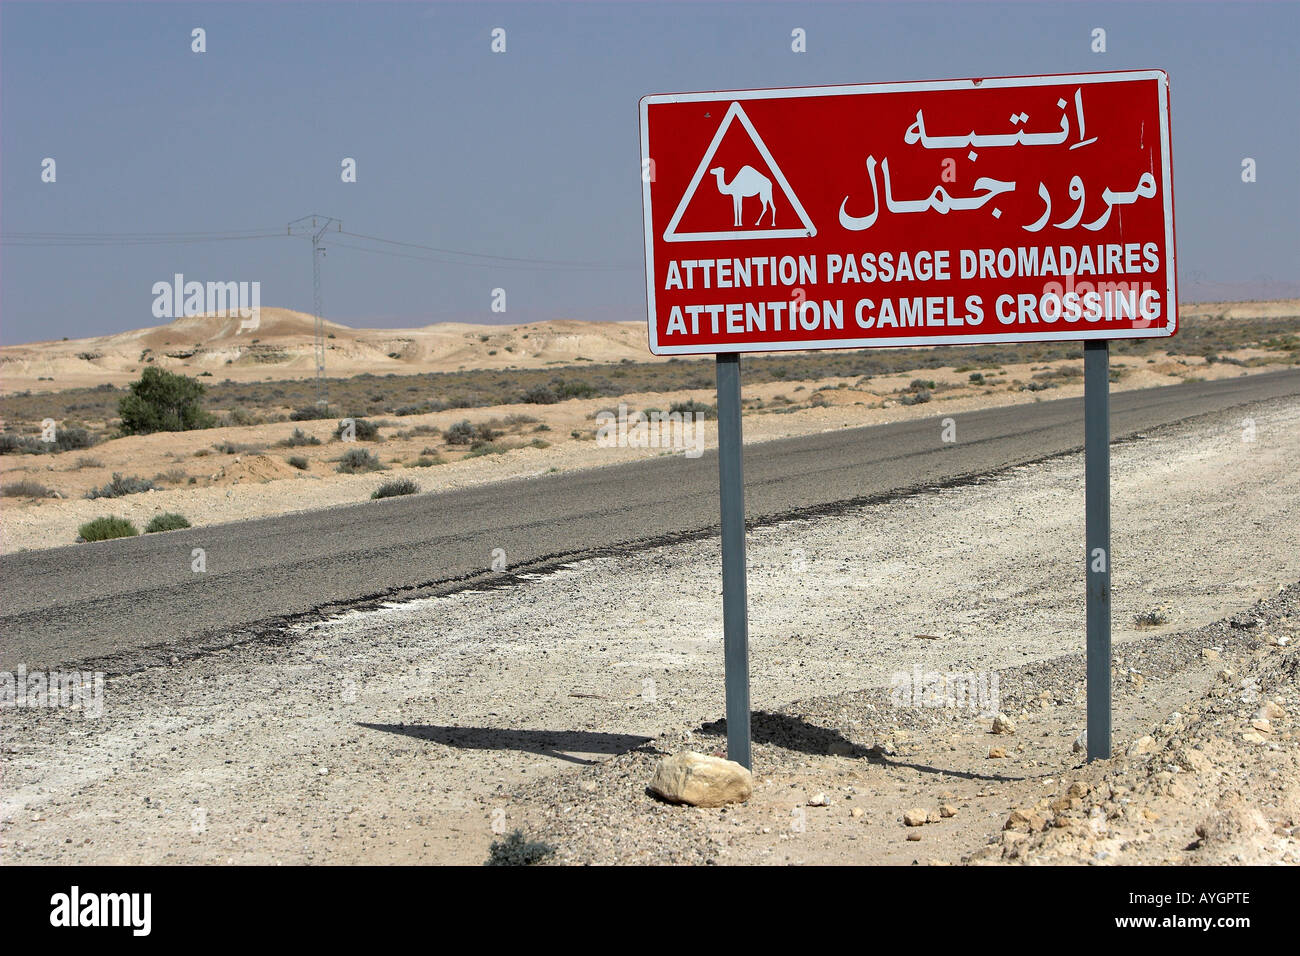 Camel incrocio autostradale di avvertimento sign in inglese francese e arabo deserto Tunisia Foto Stock